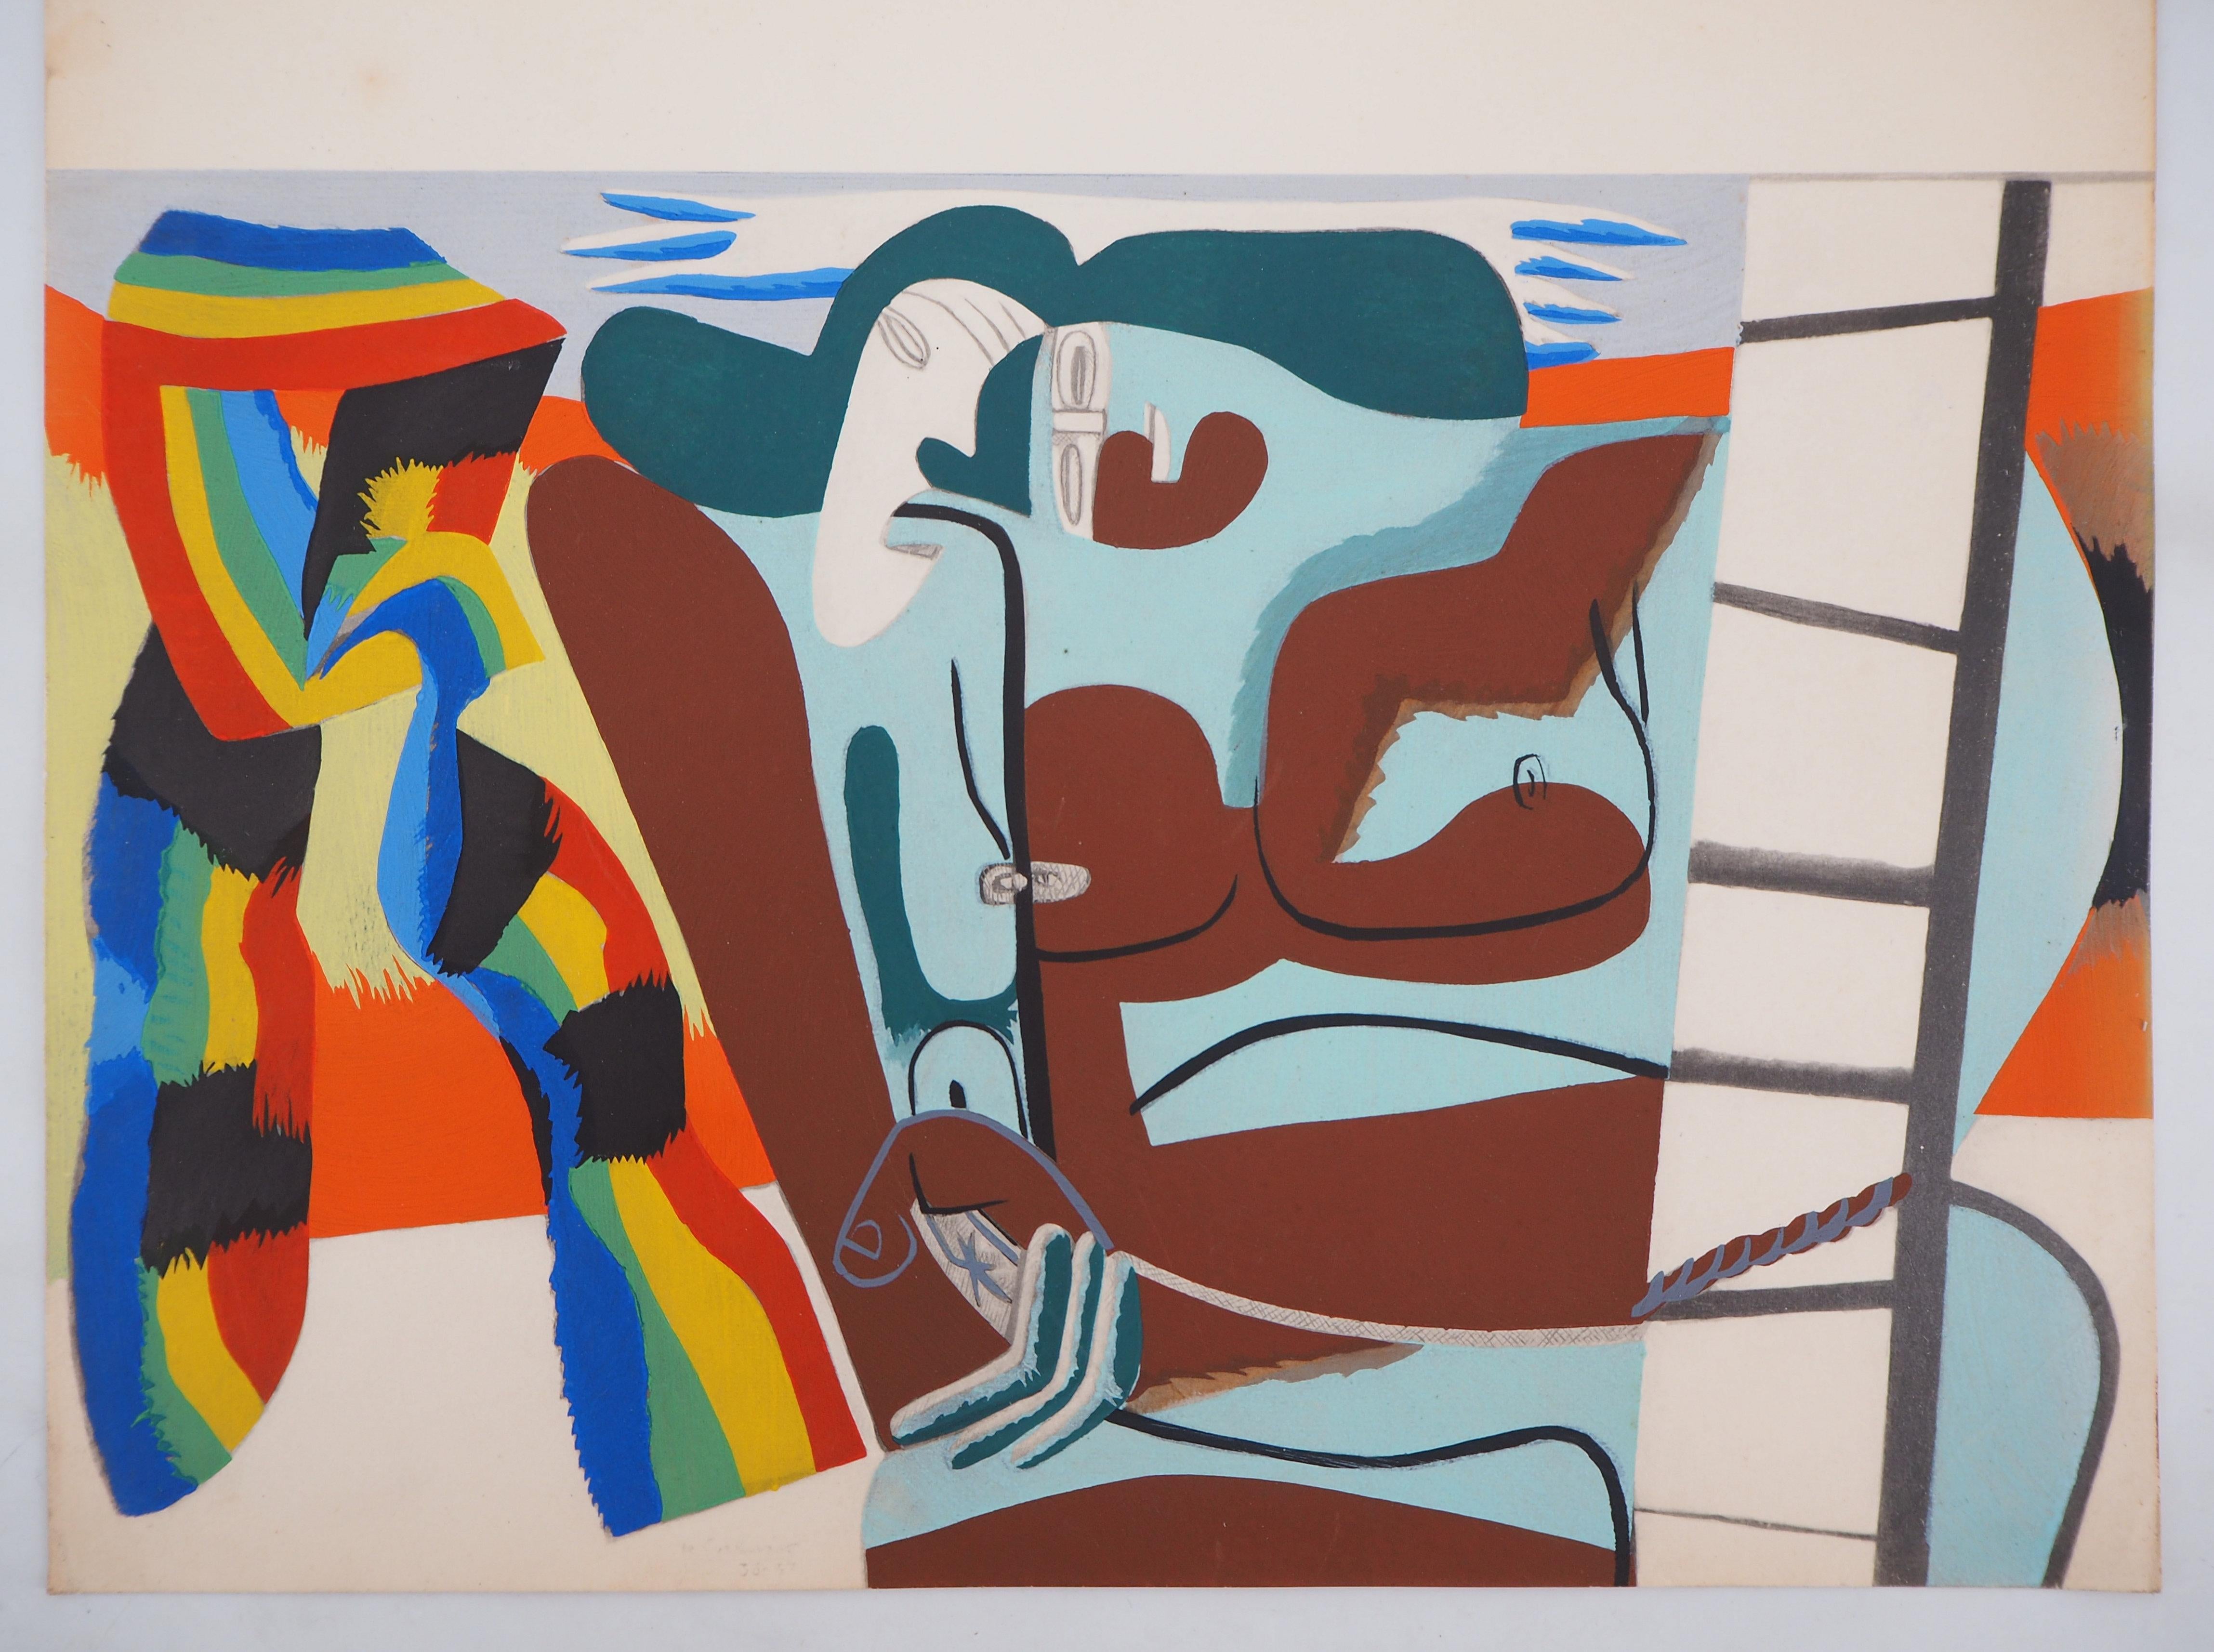 Le Corbusier Figurative Print - Pride : Two Women with Rainbow Scarf - Lithograph and watercolor stencil